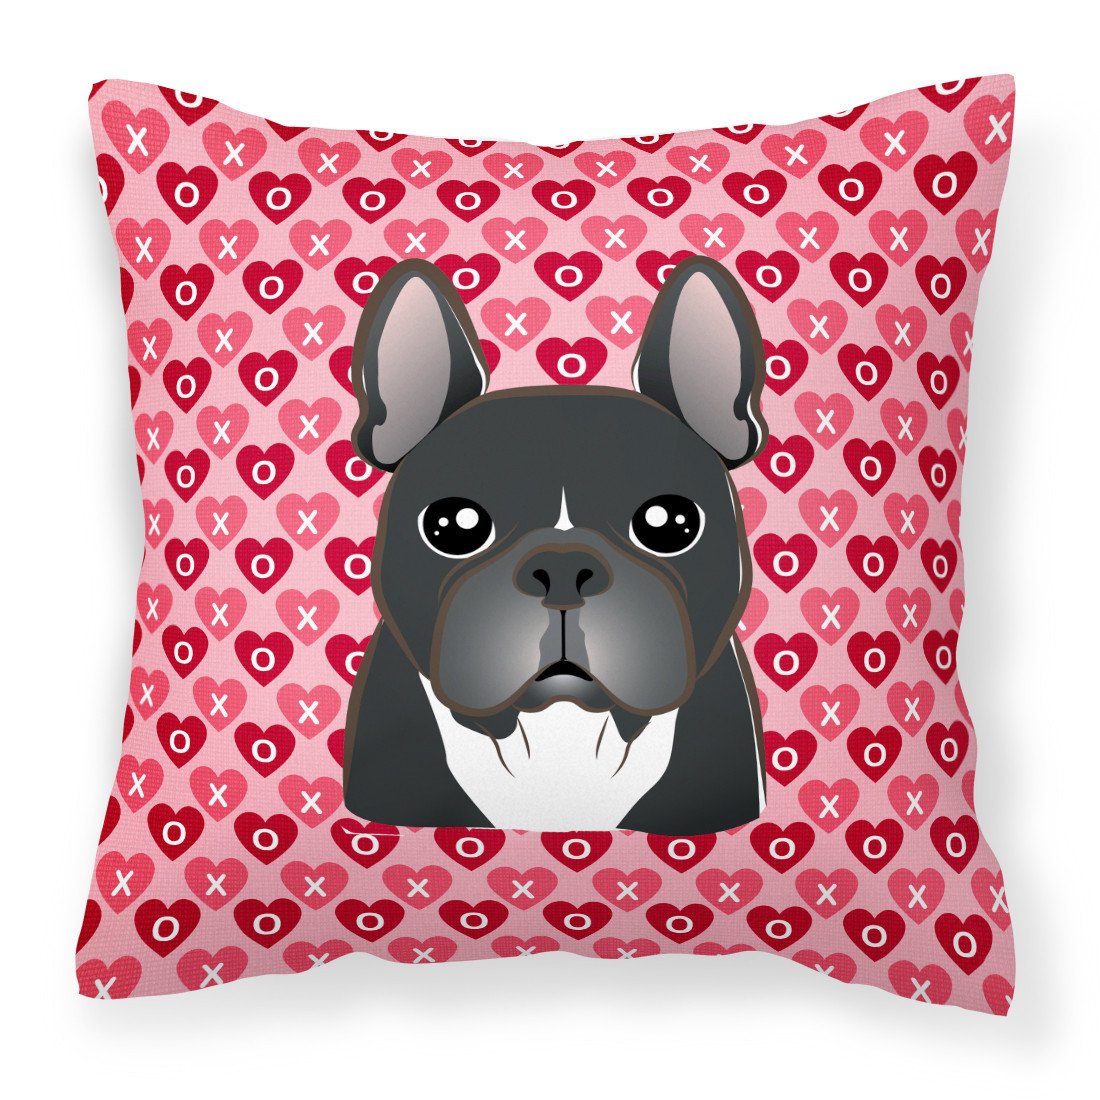 French Bulldog Hearts Fabric Decorative Pillow BB5297PW1818 by Caroline's Treasures